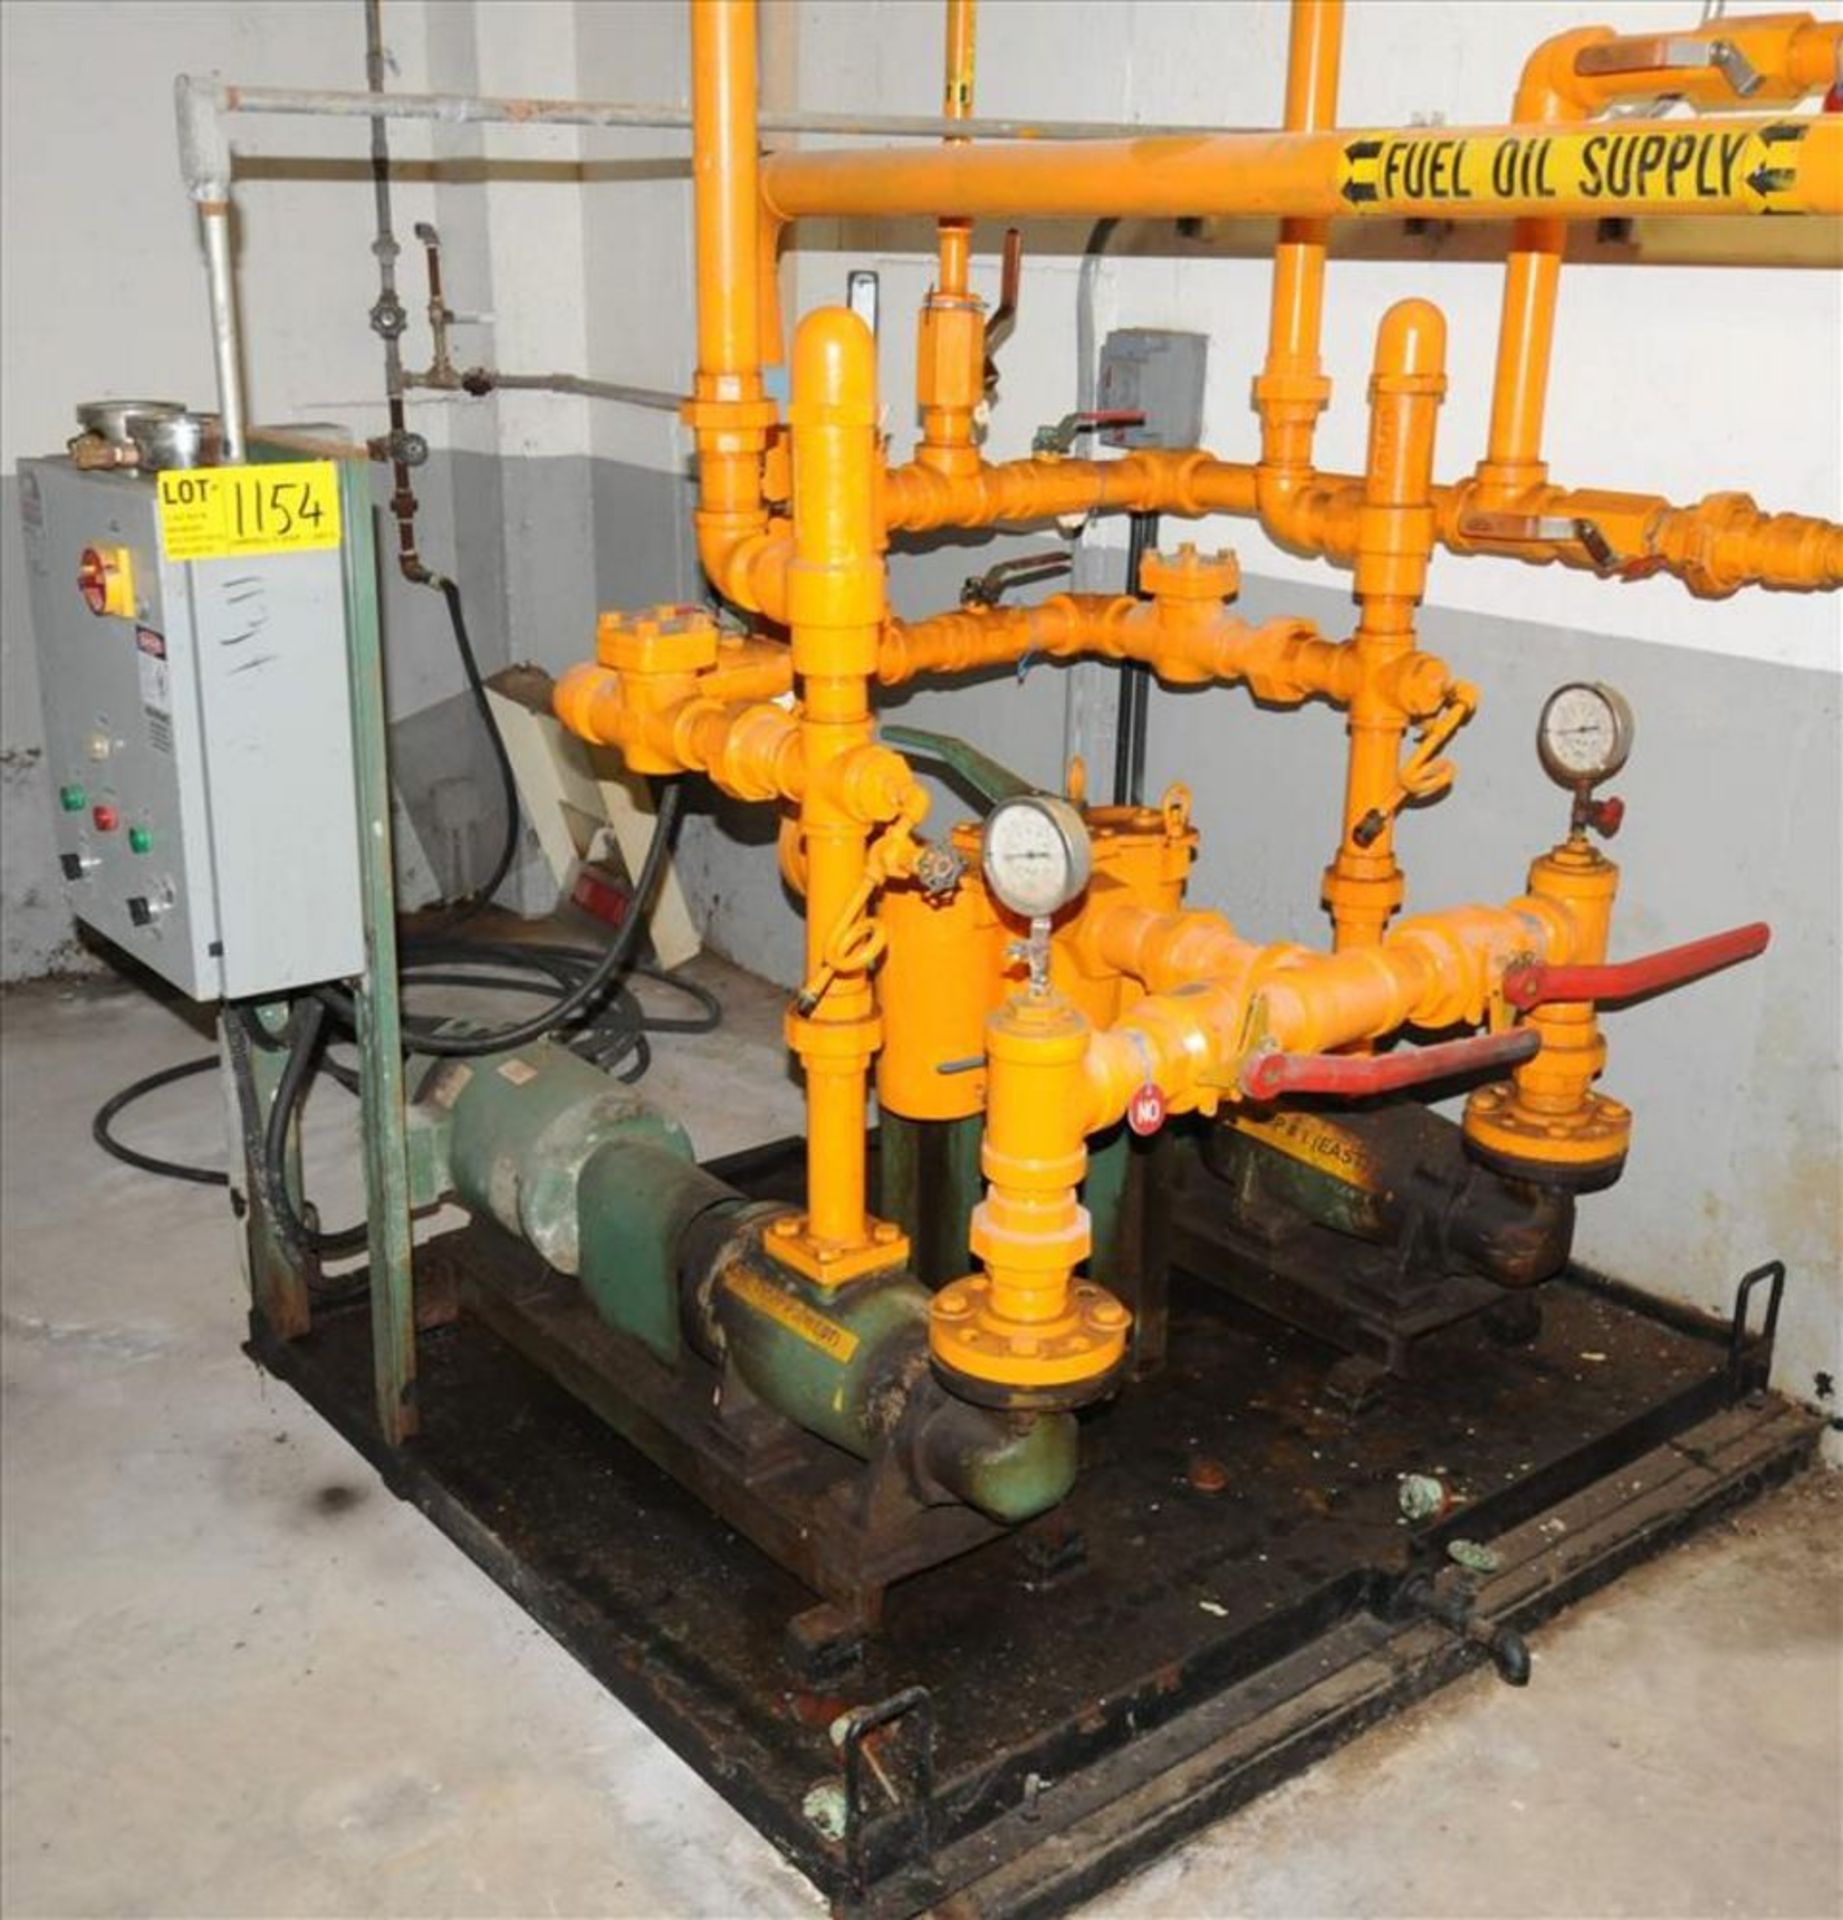 Torna Tech duplex gas pump and control system mod. no. ADA 600 / 2x 10/3/60 ser. no. 20209029-1/1,